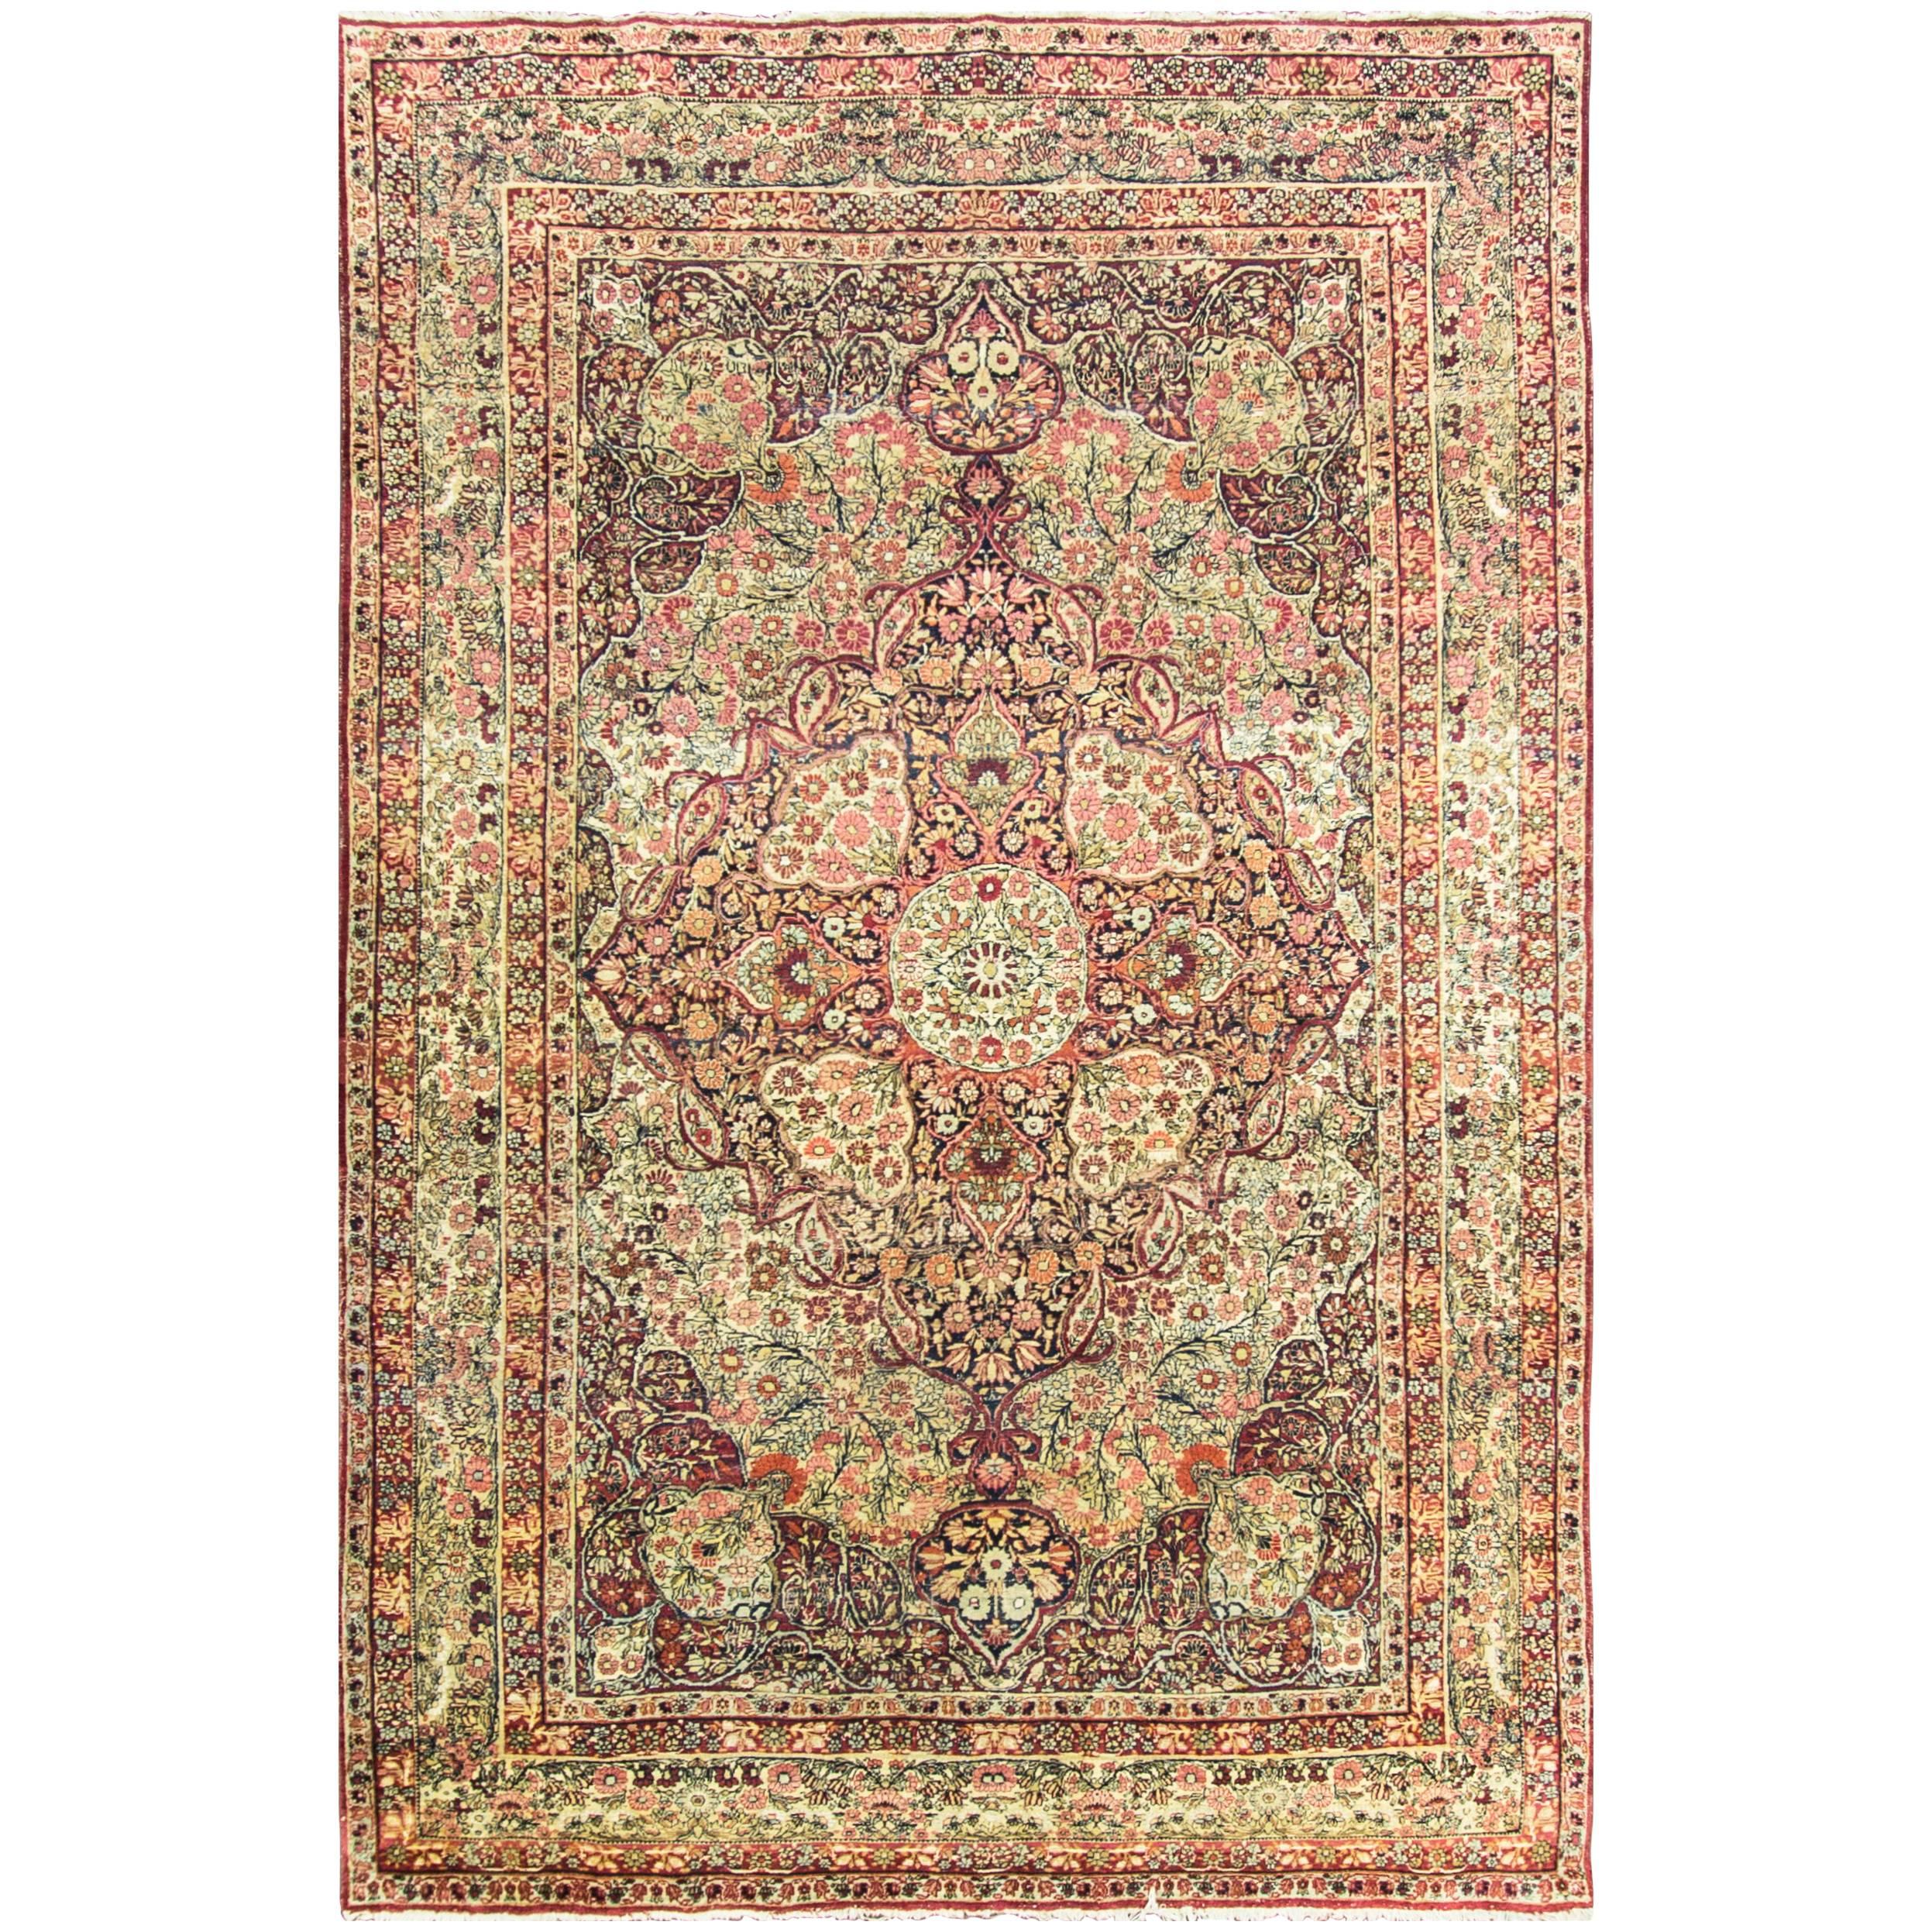  Antique Persian Kermanshah Carpet, 6'10" x 10'2"